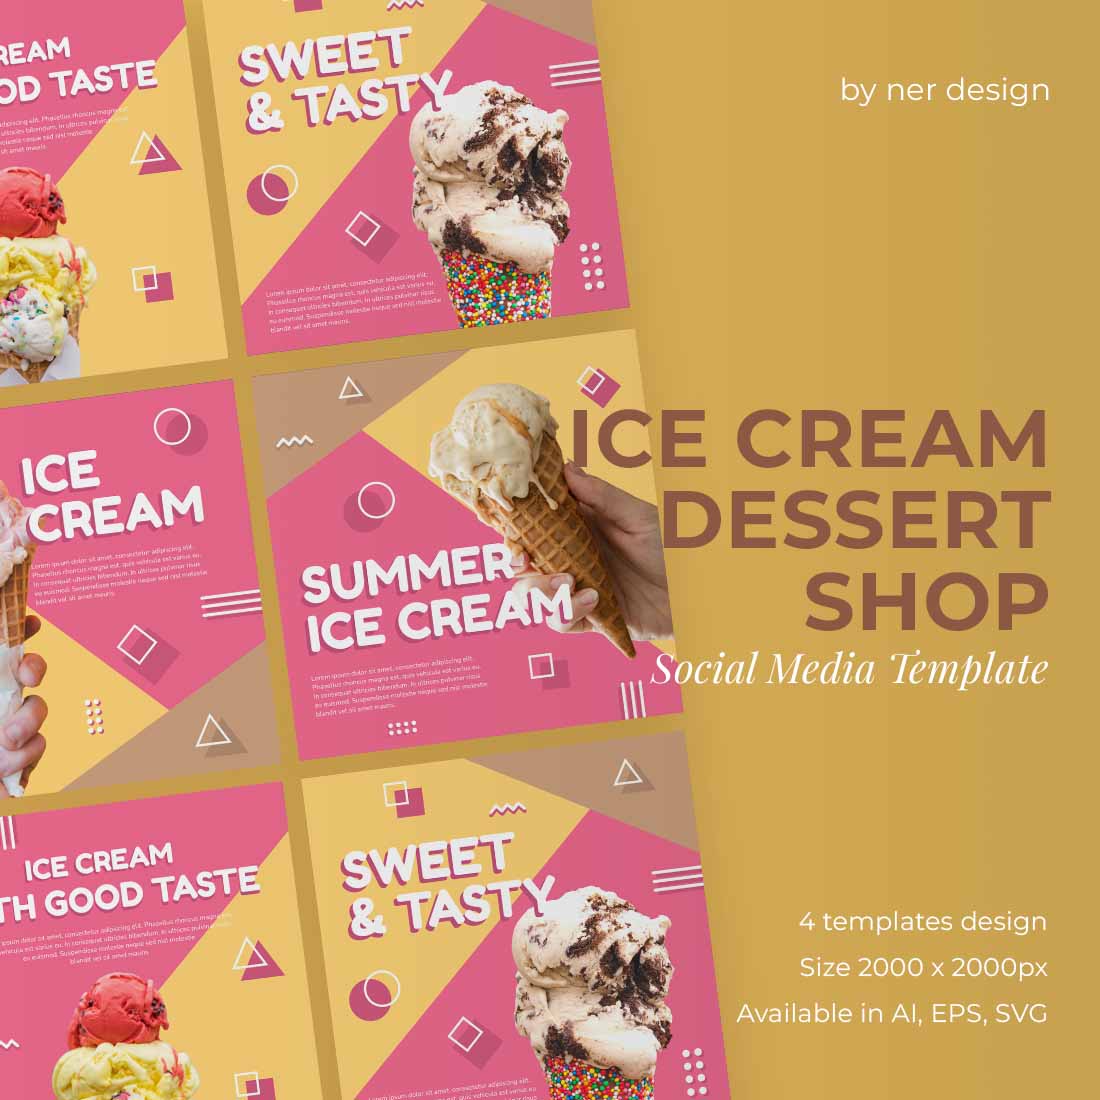 Ice Cream Dessert Shop Social Media Banner Template cover image.